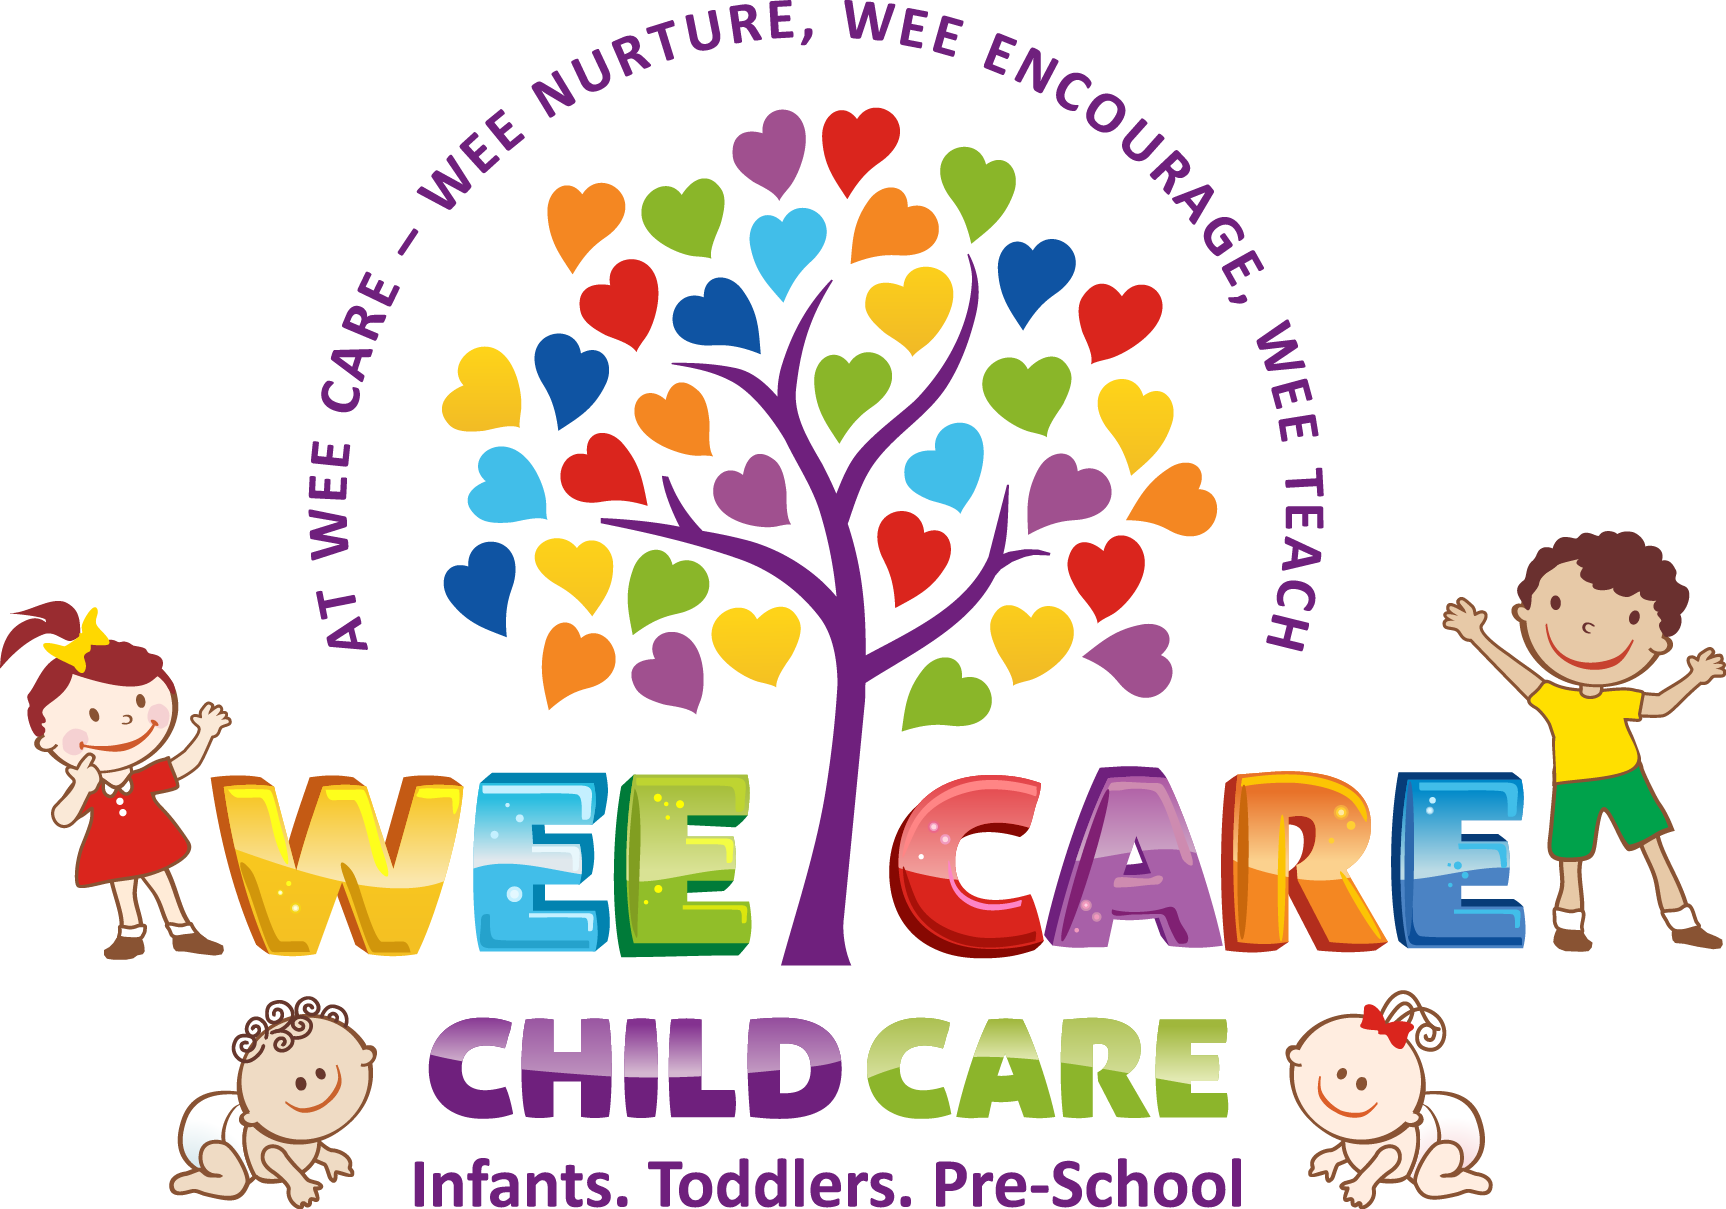 Care Child Care - Child Care (1726x1209)